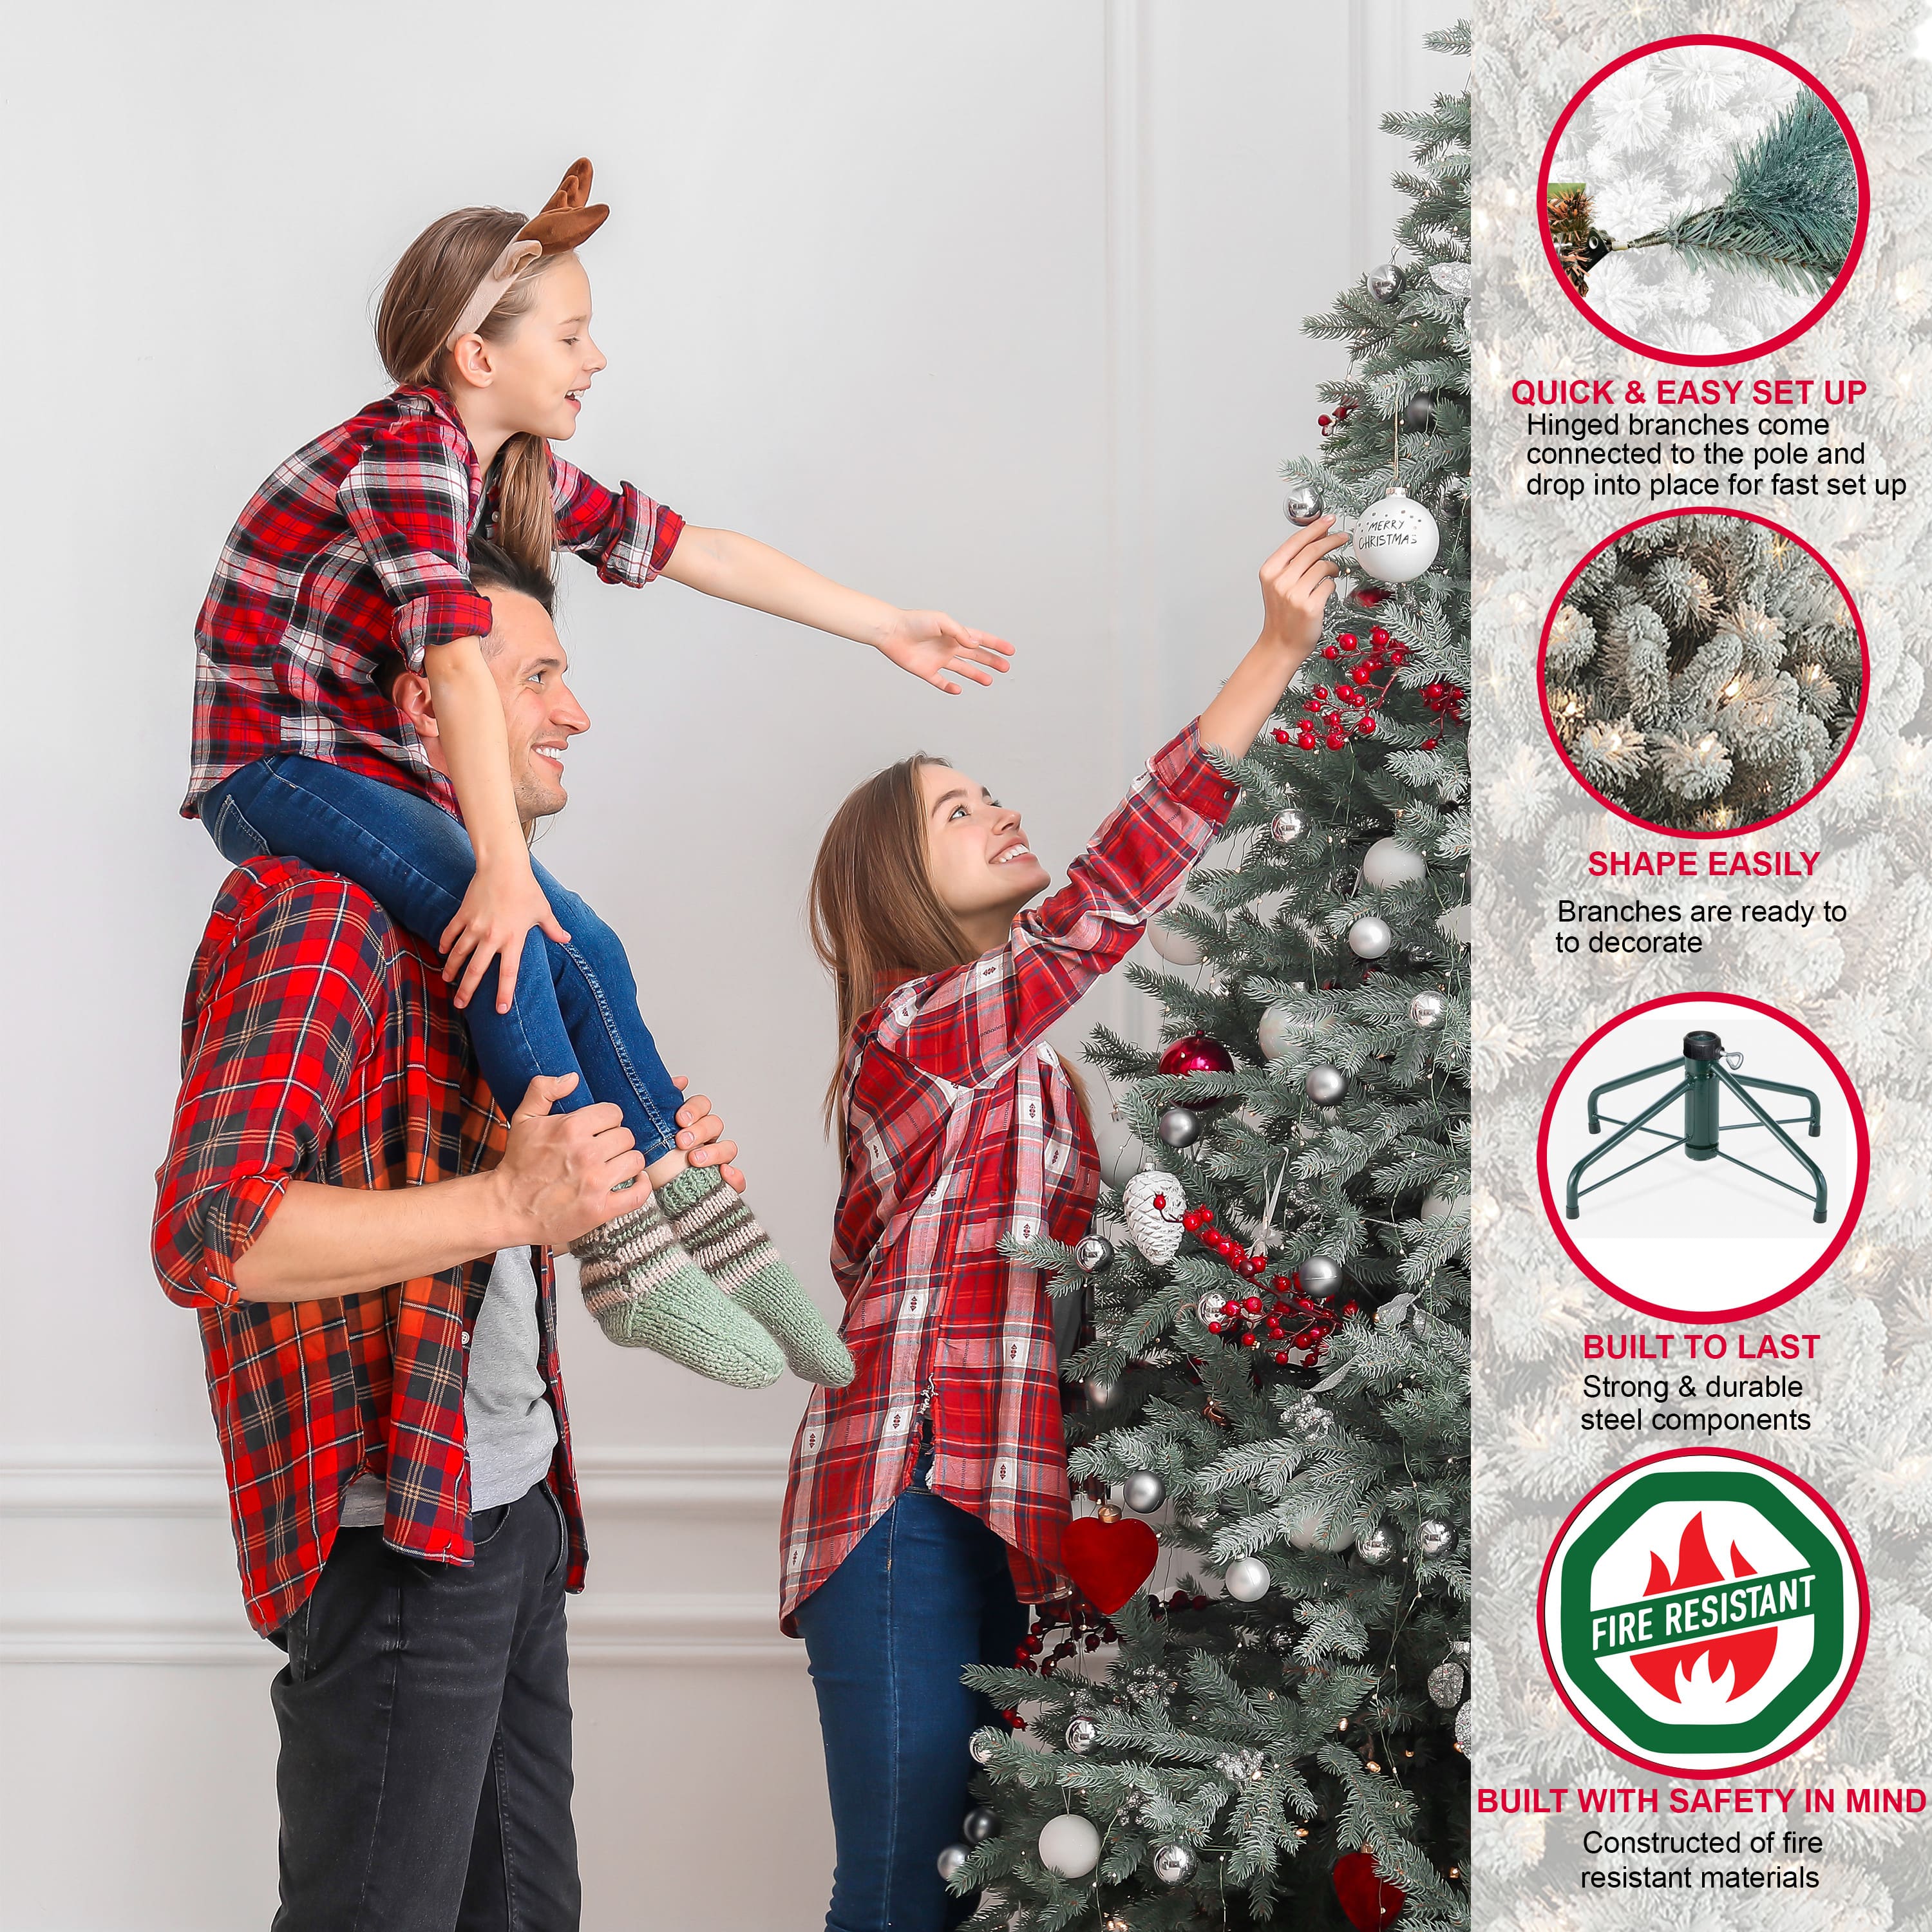 6 Pack: 4.5ft. Unlit Flocked Virginia Pine Artificial Christmas Tree